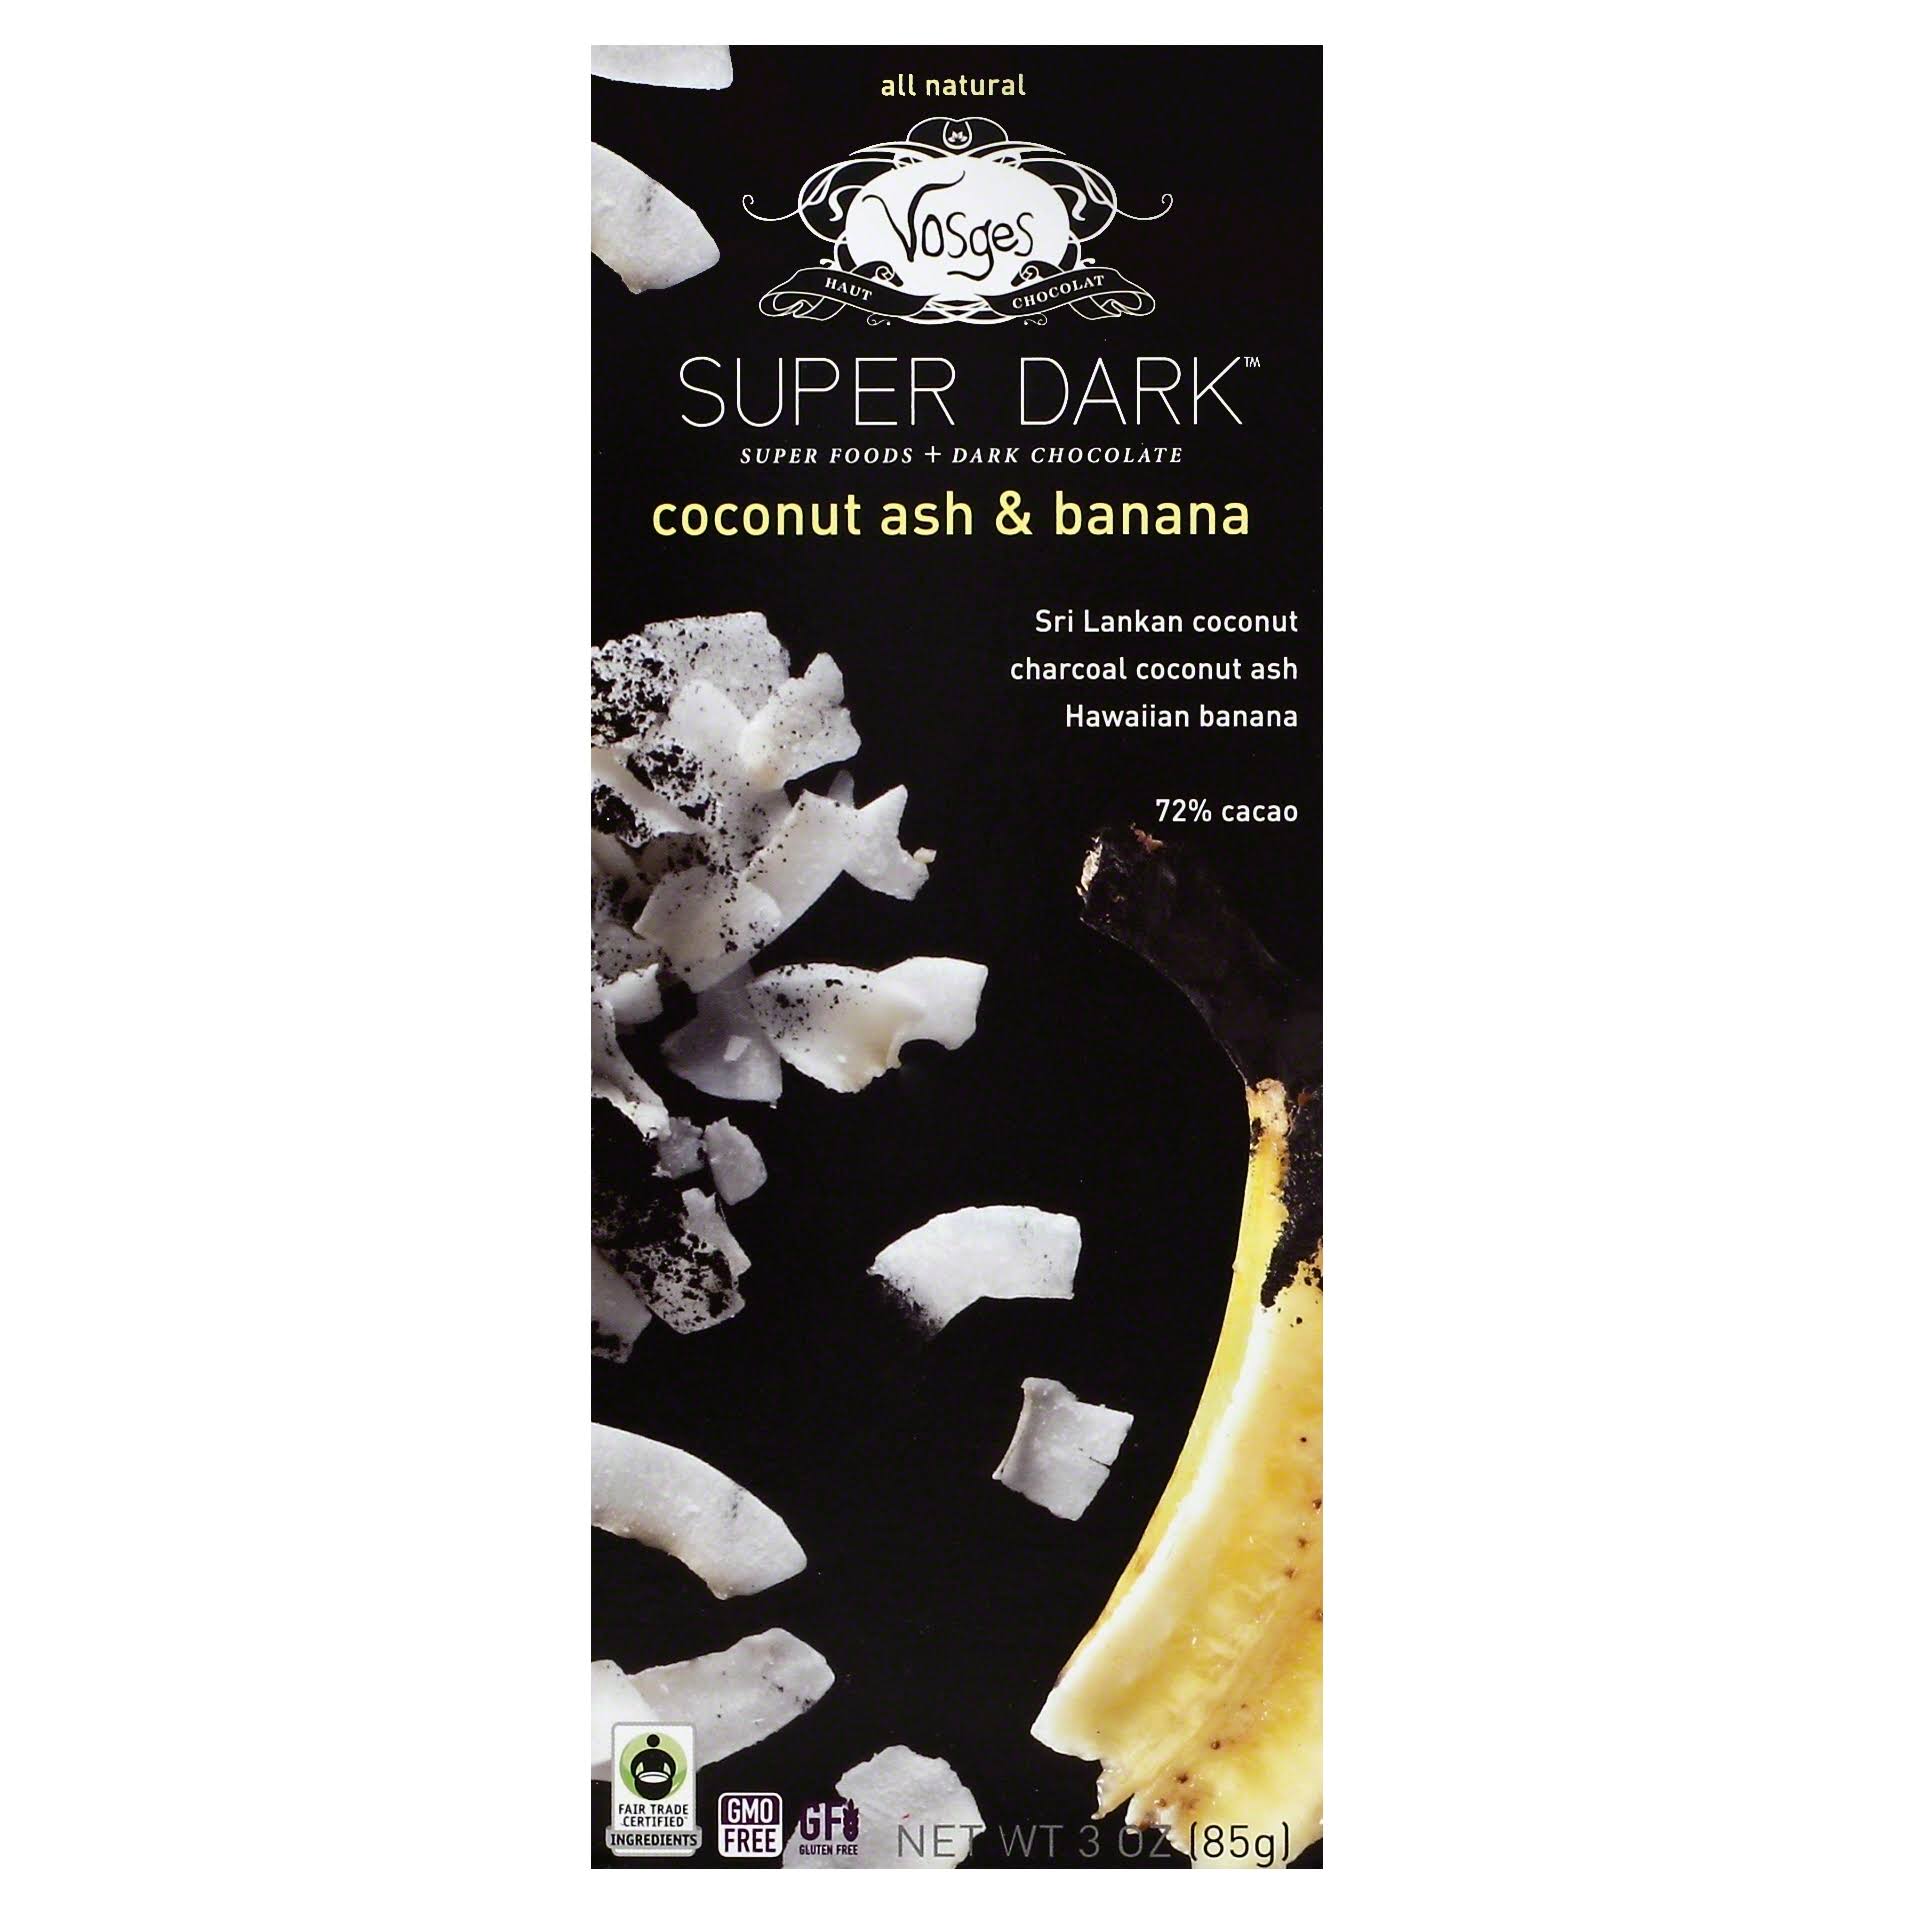 Vosges Haut Chocolat Super Dark - Coconut Ash & Banana, 85g